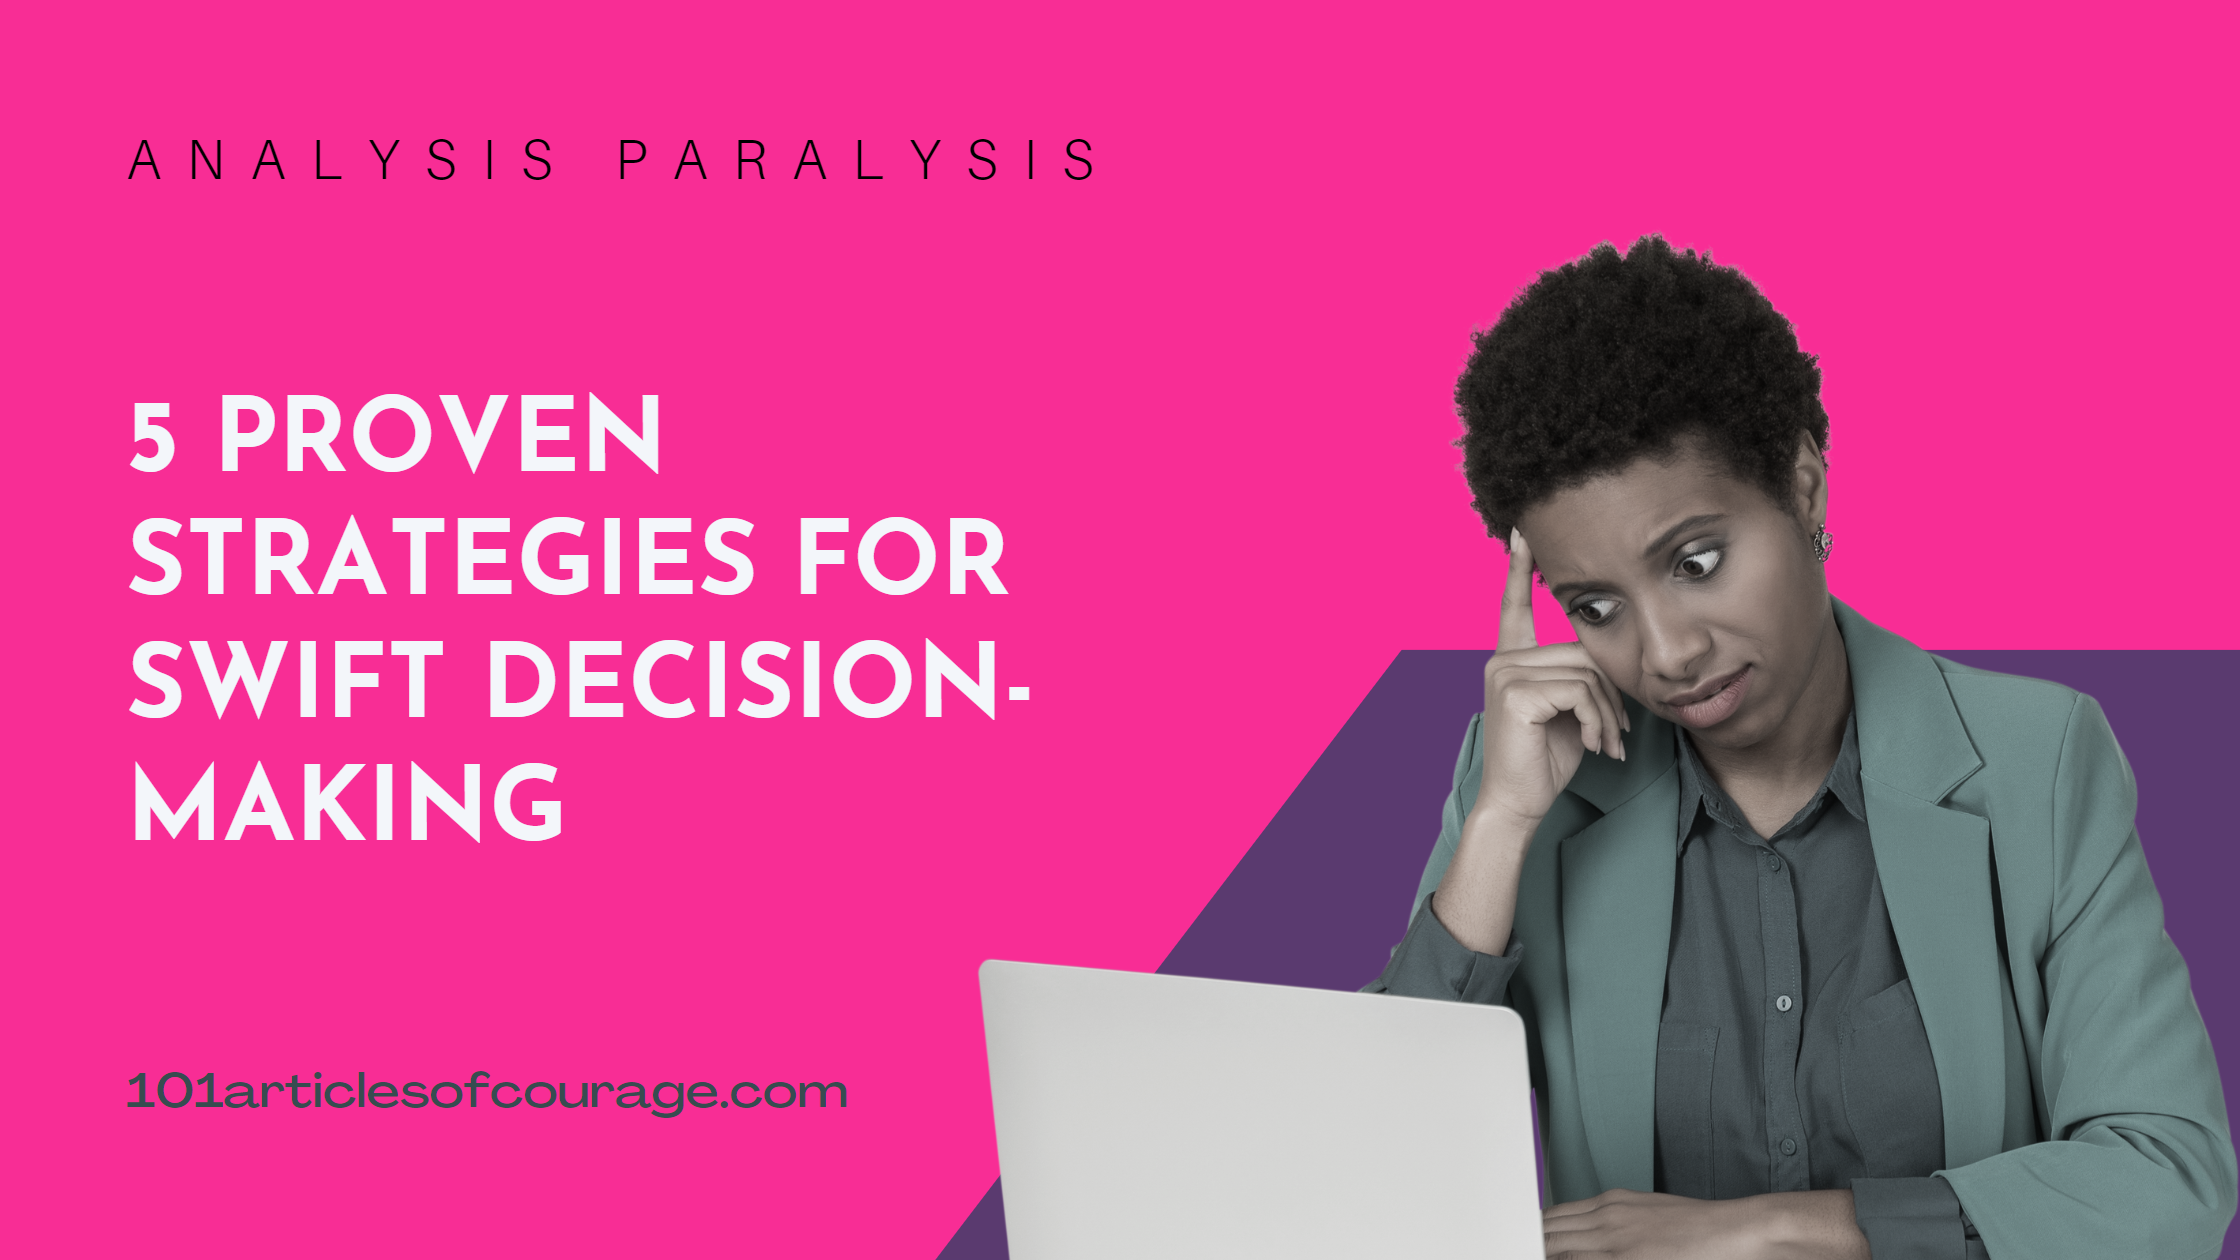 How to Overcome Analysis Paralysis: 4 Effective Strategies - LifeHack